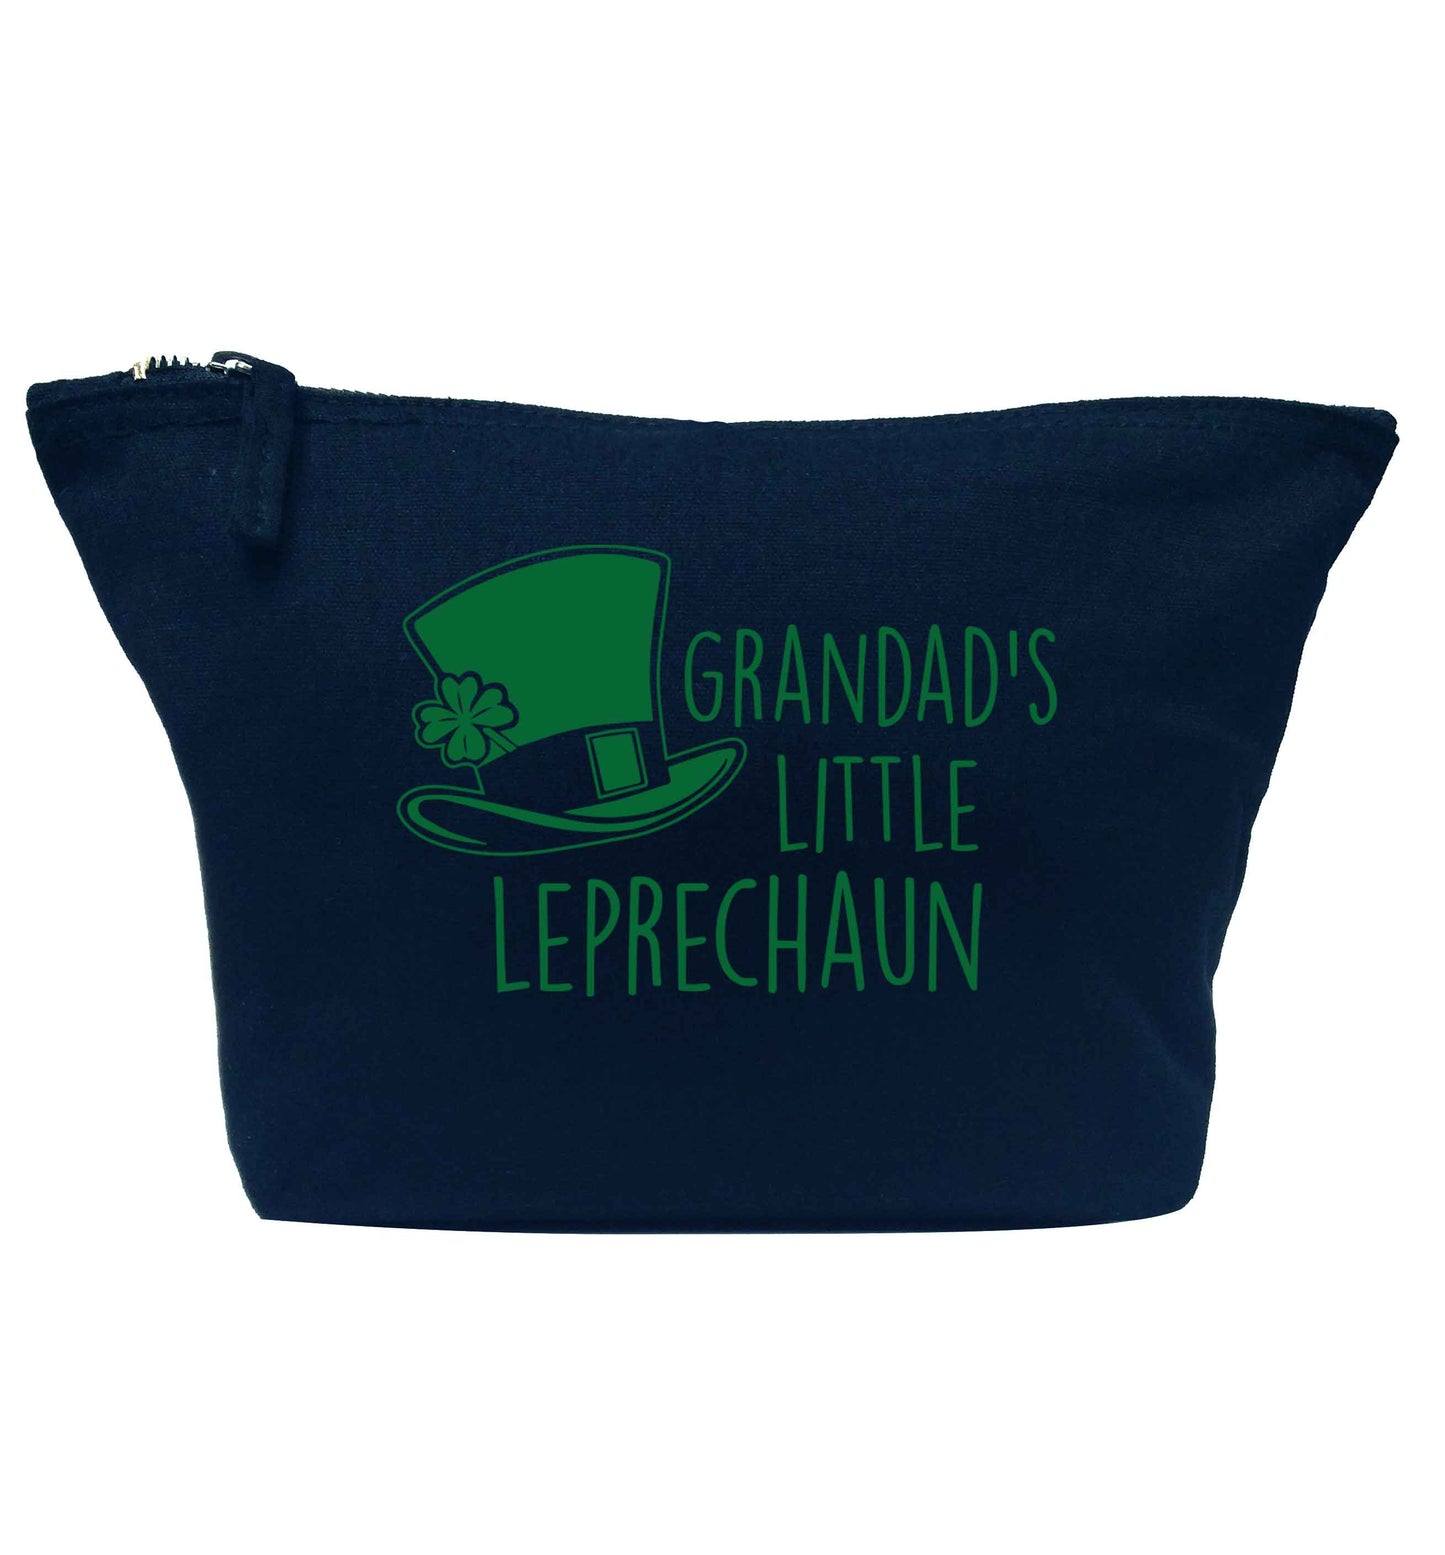 Grandad's little leprechaun navy makeup bag